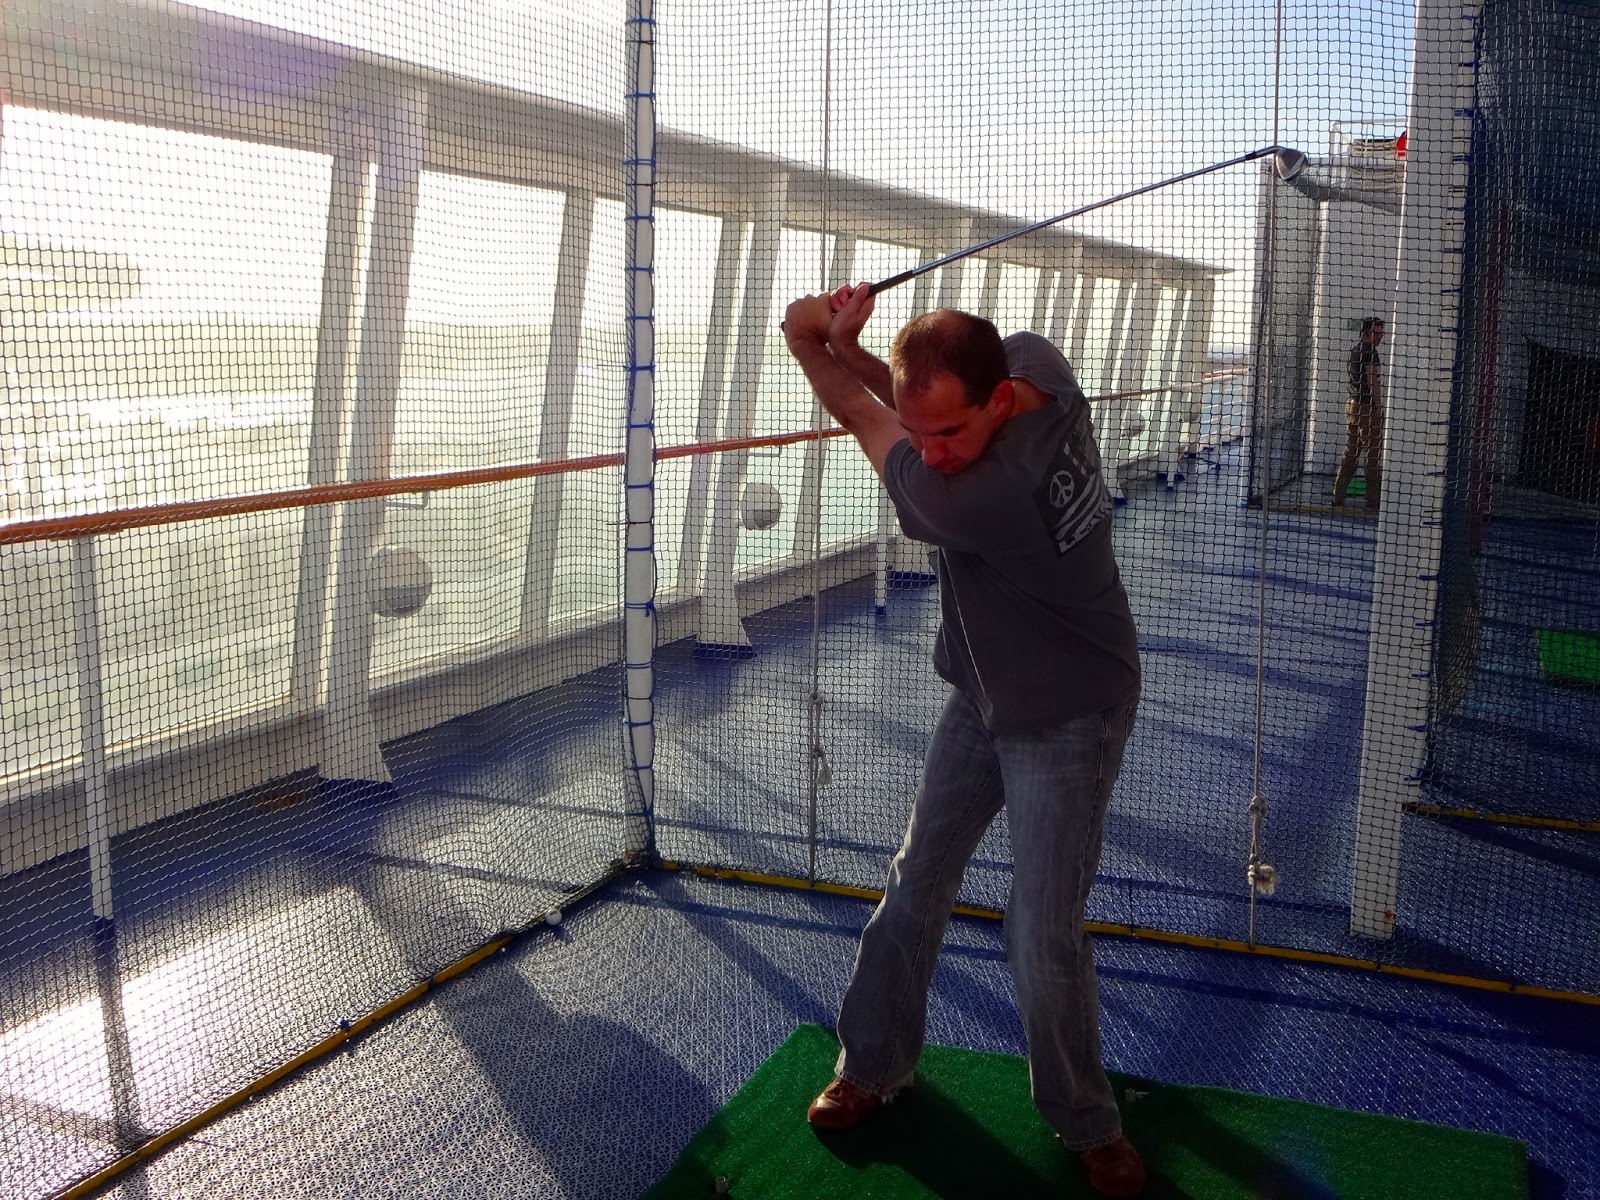 Golf on a cruise ship